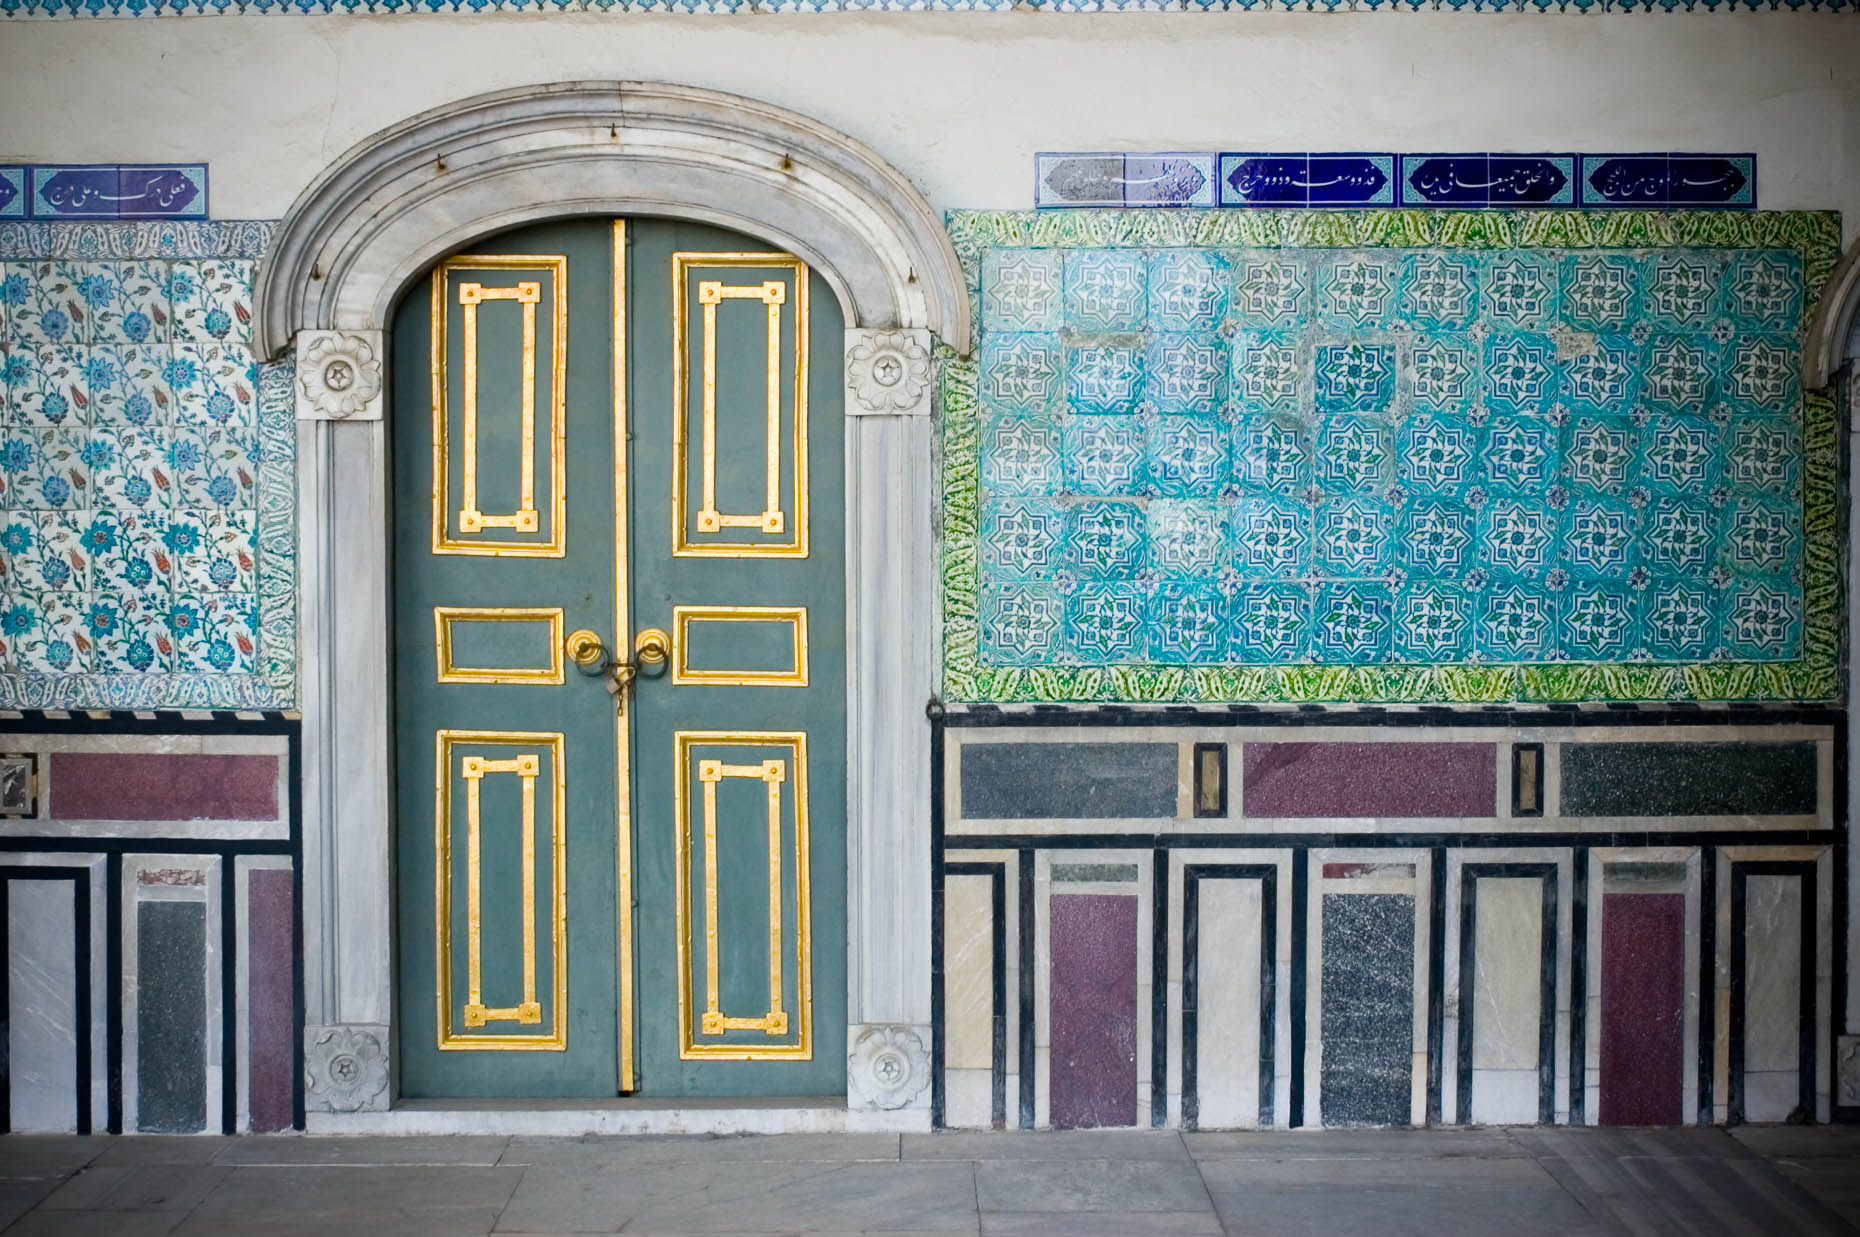 Intricate mosaic tile doorway at Hagia Sophia Mosque, Istanbul Turkey.